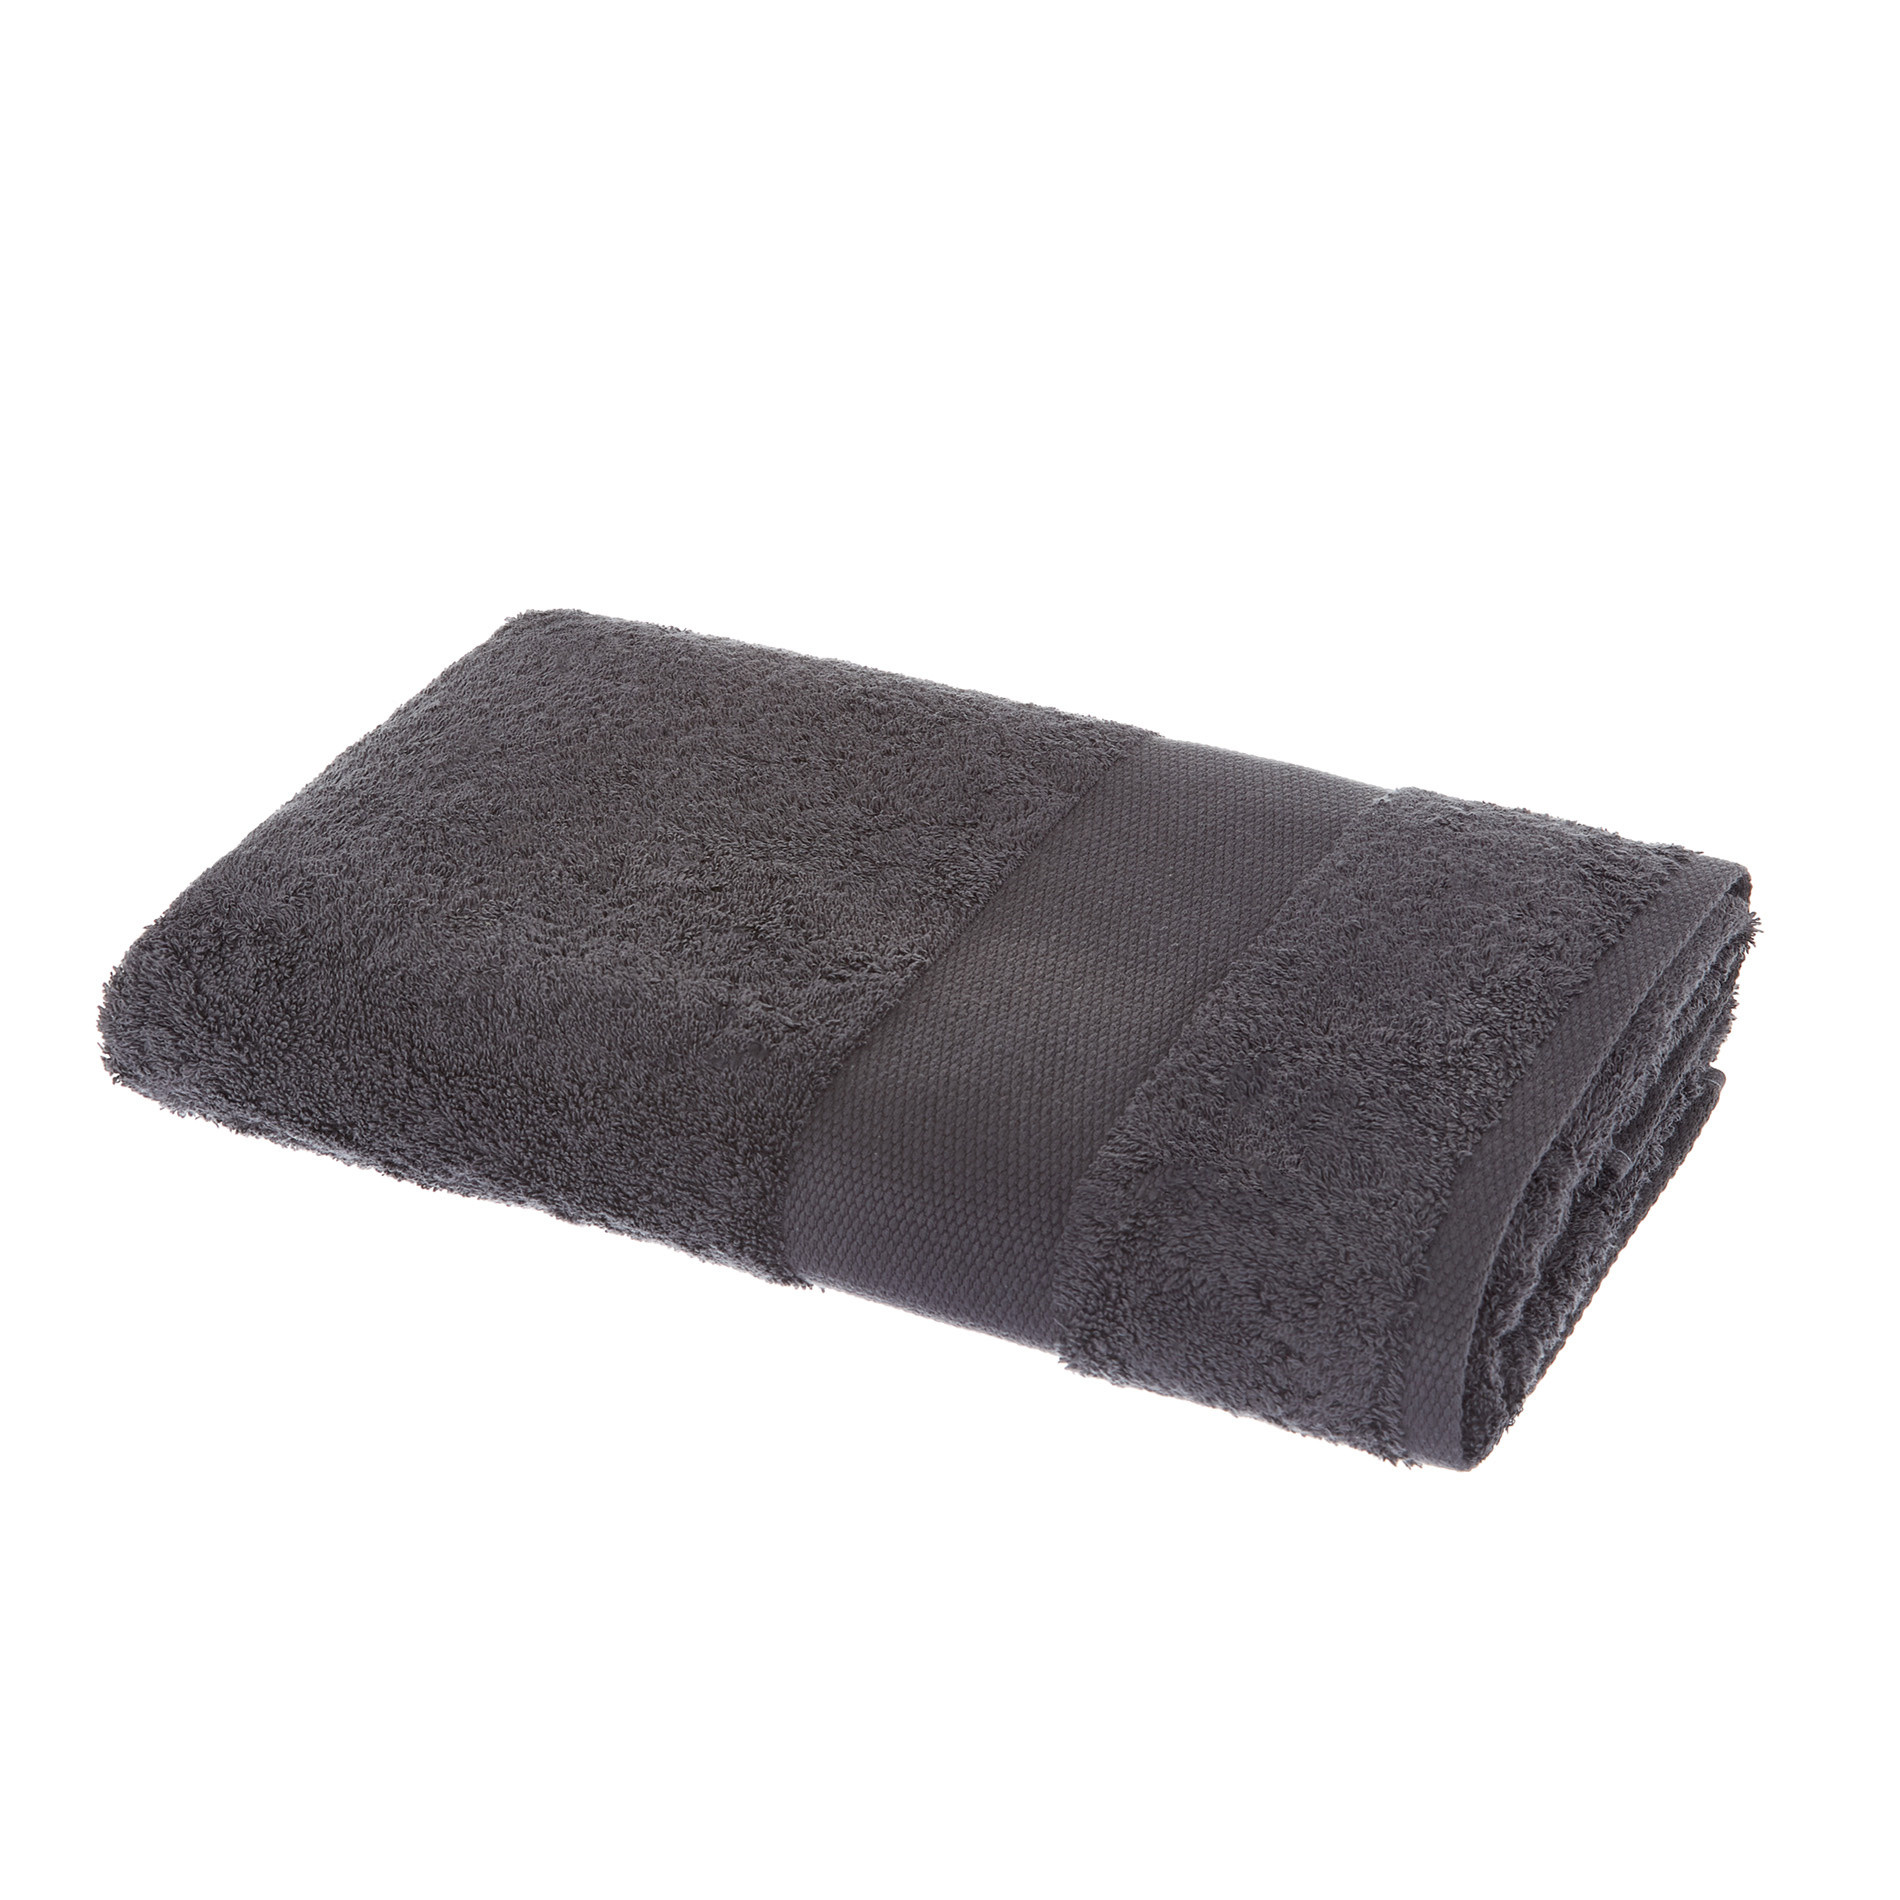 Asciugamano spugna di puro cotone Zefiro, Grigio scuro, large image number 1